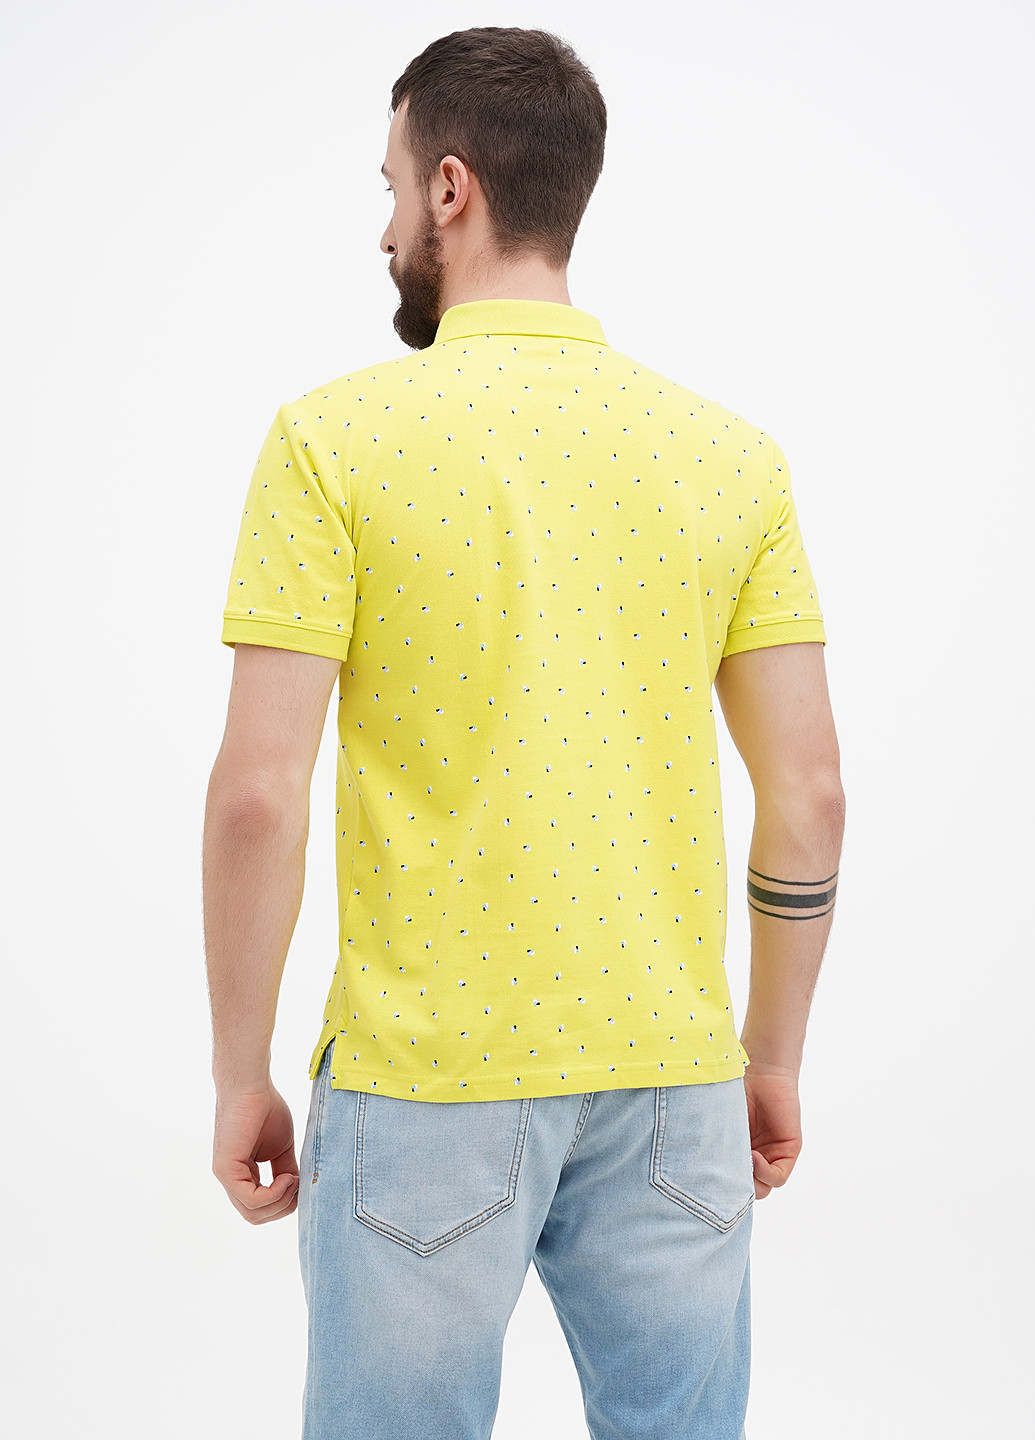 Лайм футболка-поло для мужчин Tom Tailor с геометрическим узором